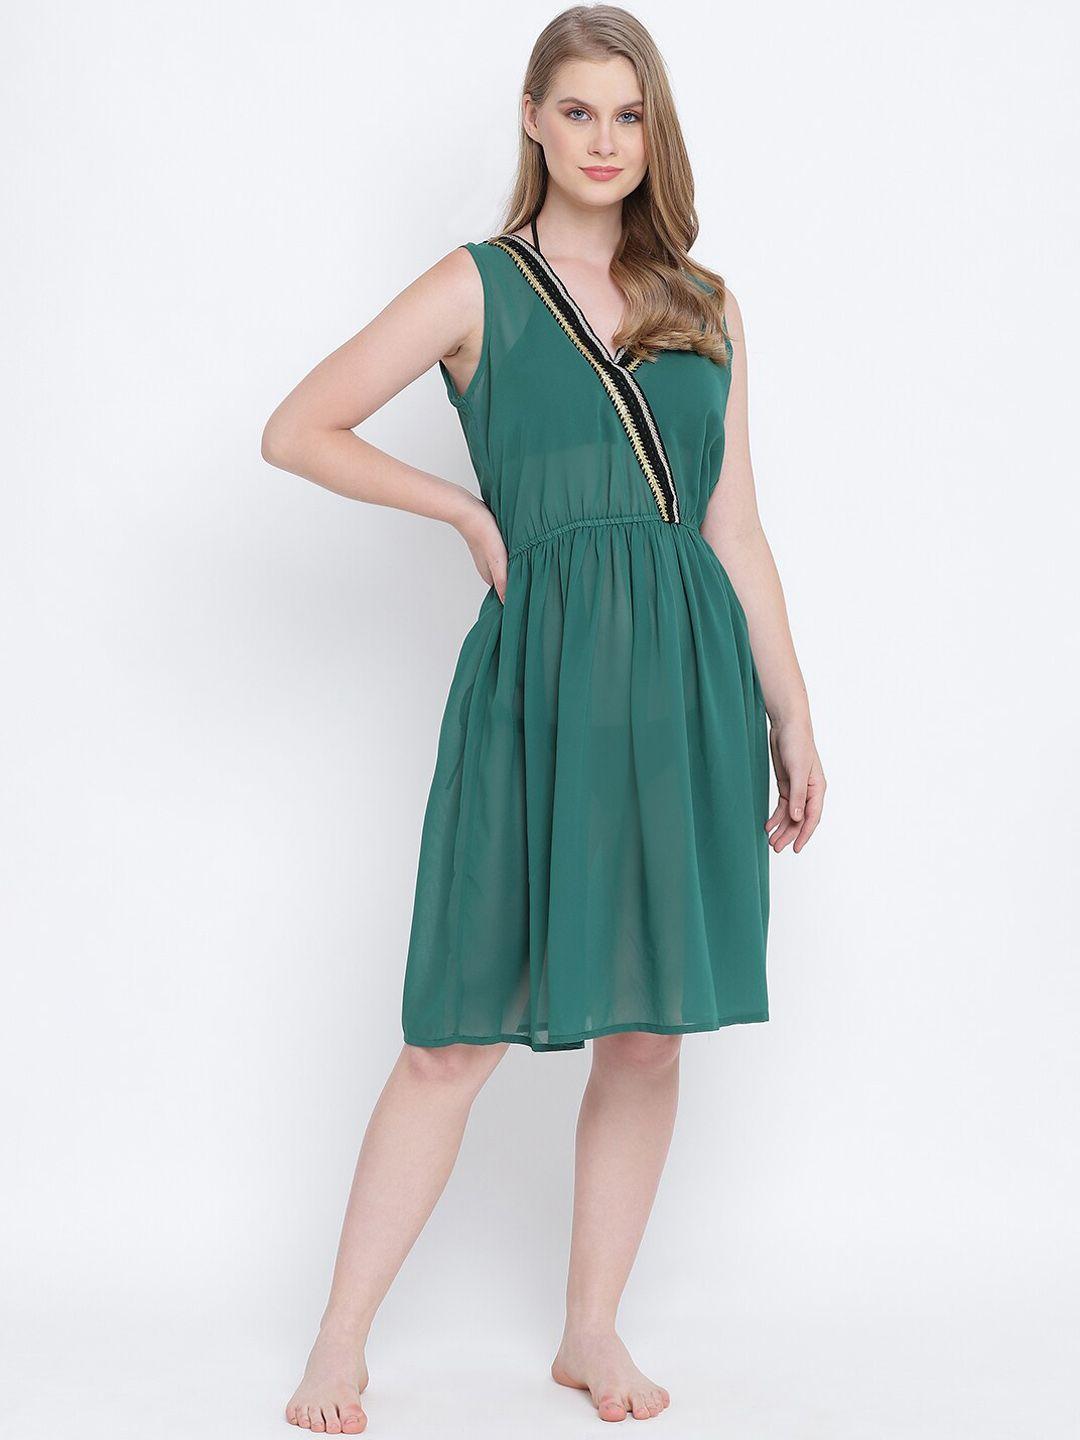 oxolloxo womens green lace design beachwear dress